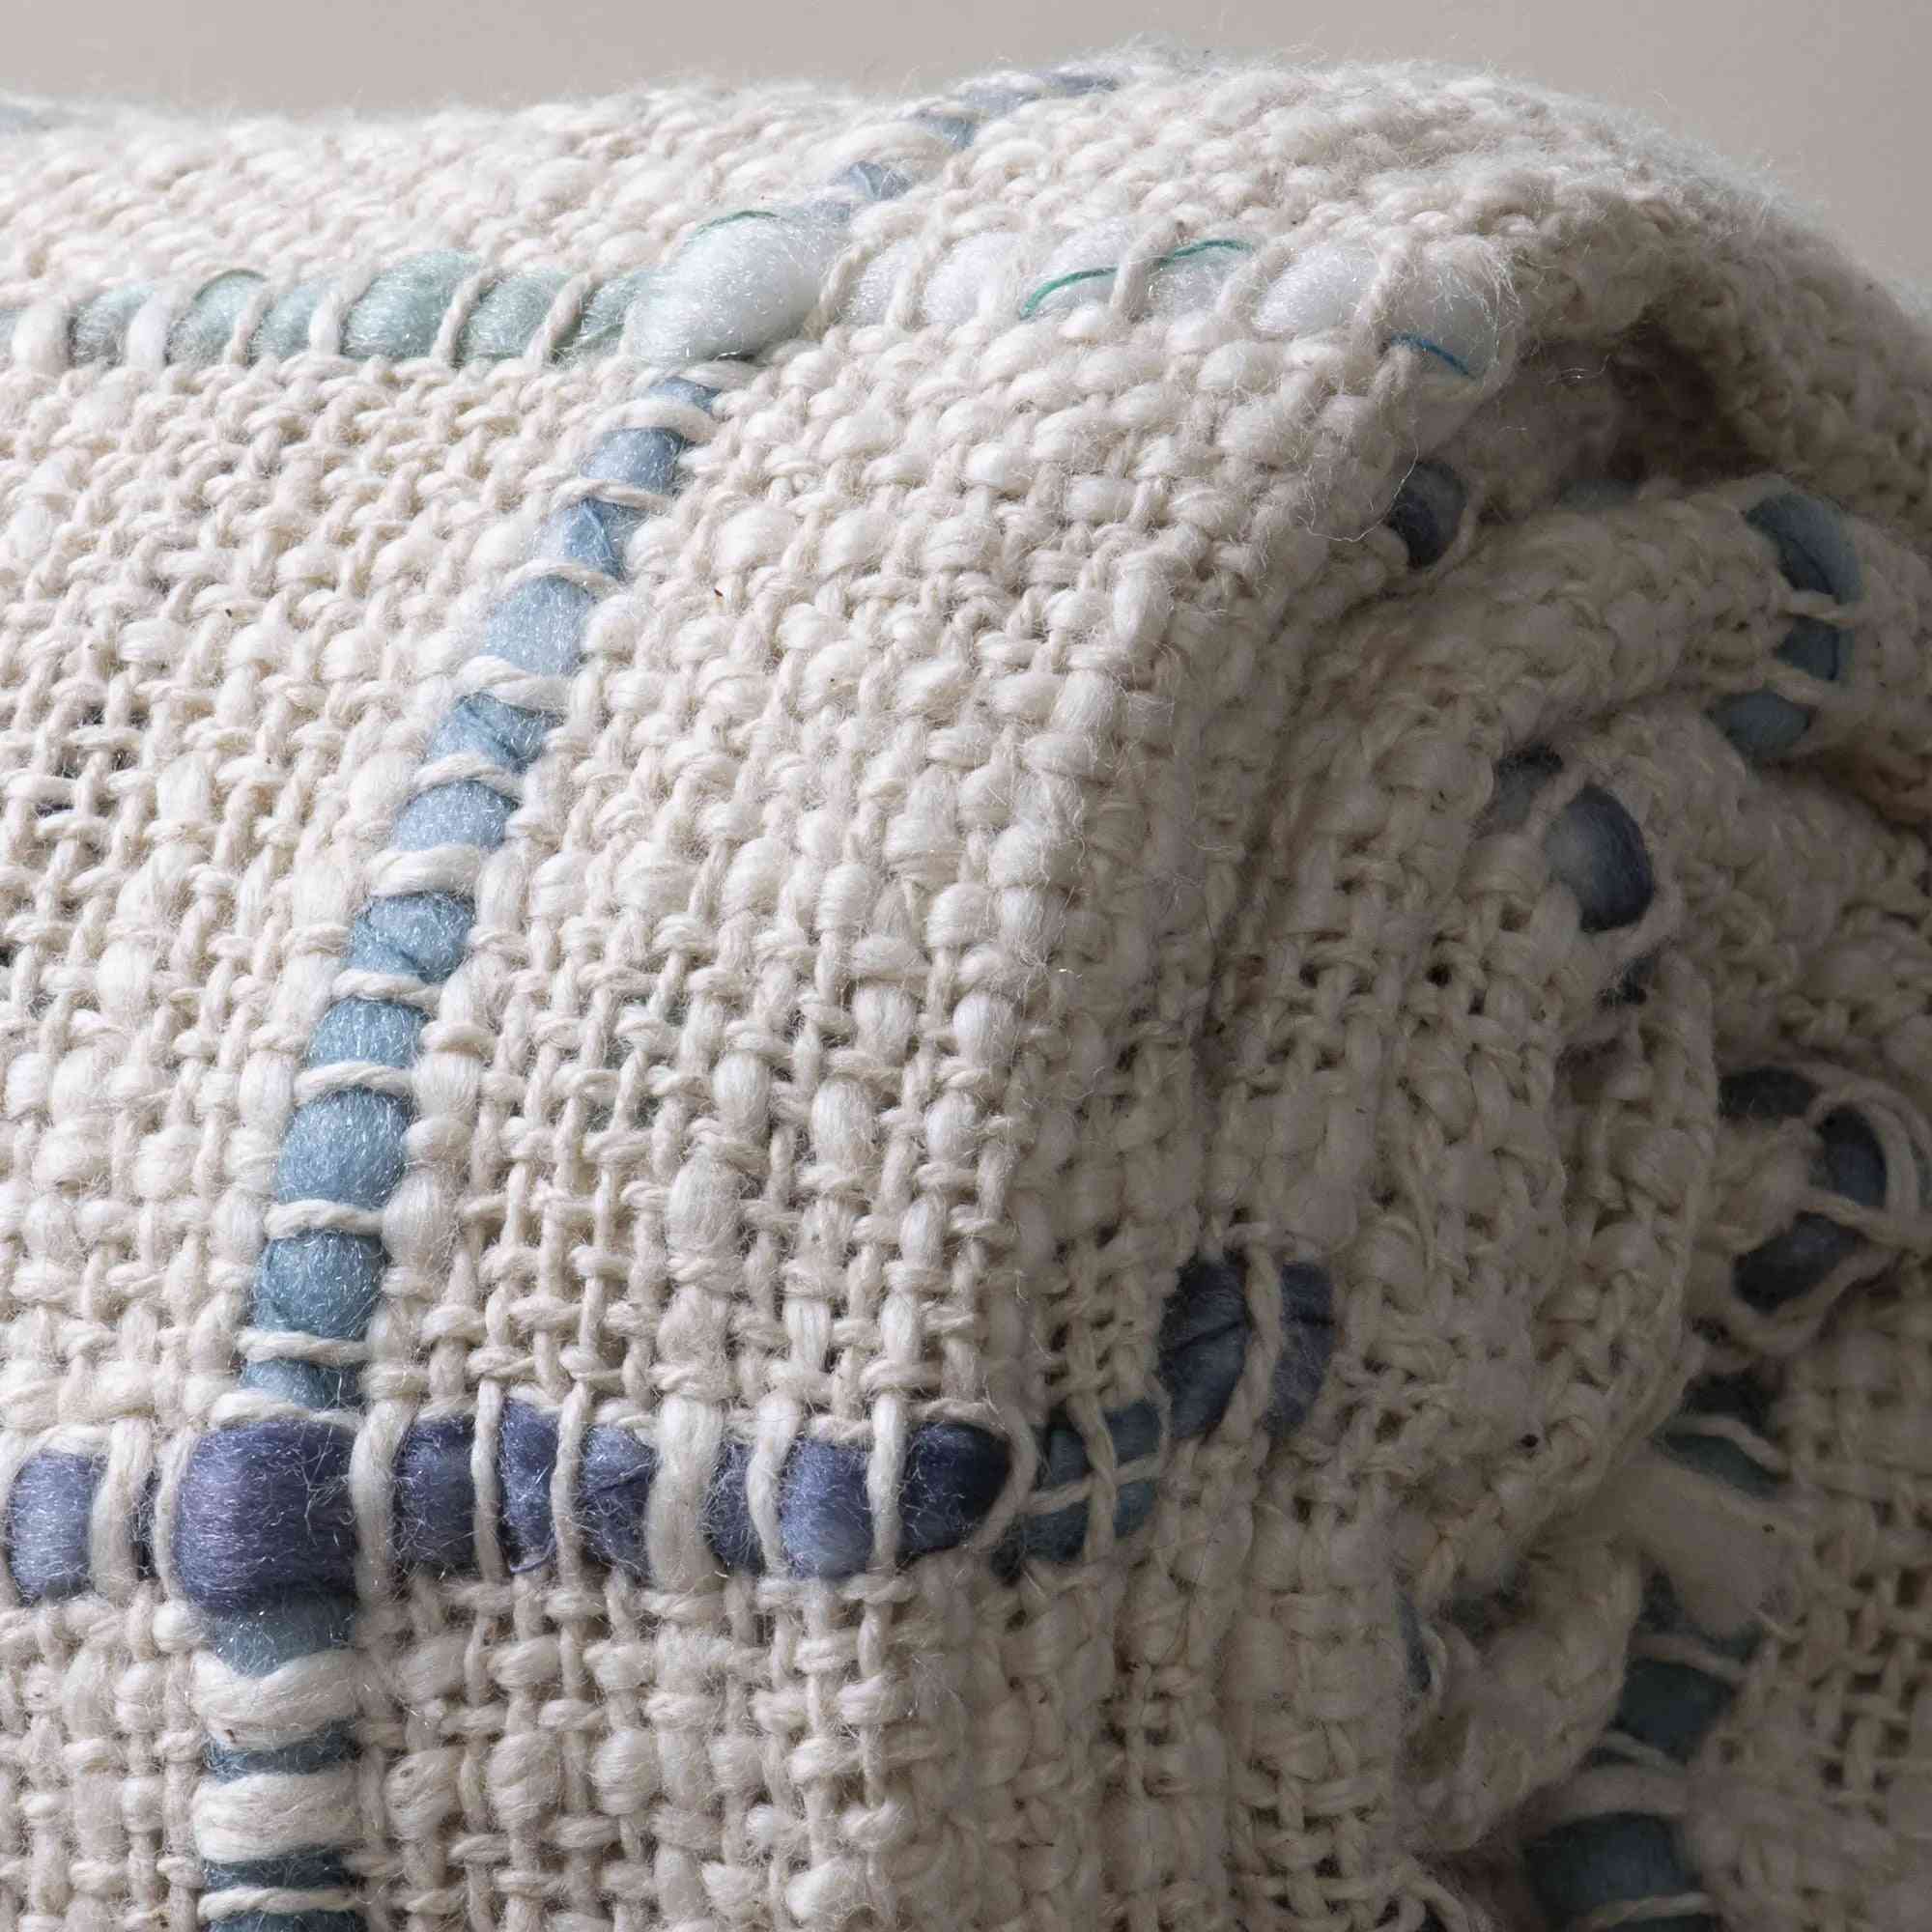 100% cotton throw blanket for home decor